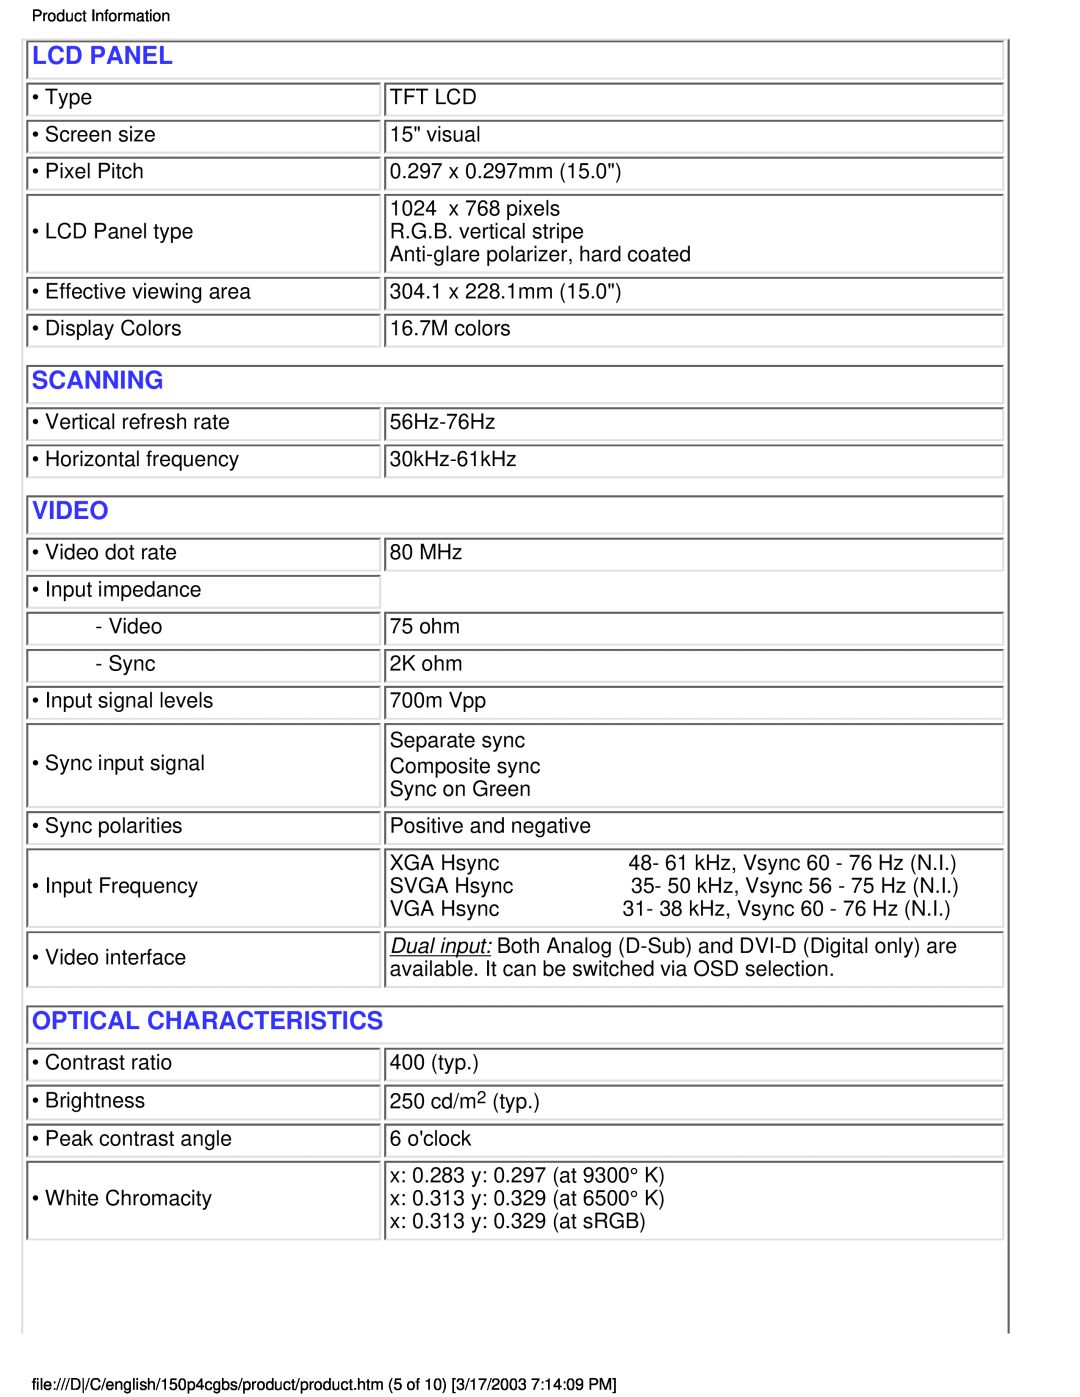 Philips 150P4CS, 150P4CG user manual Scanning, Video, Optical Characteristics 